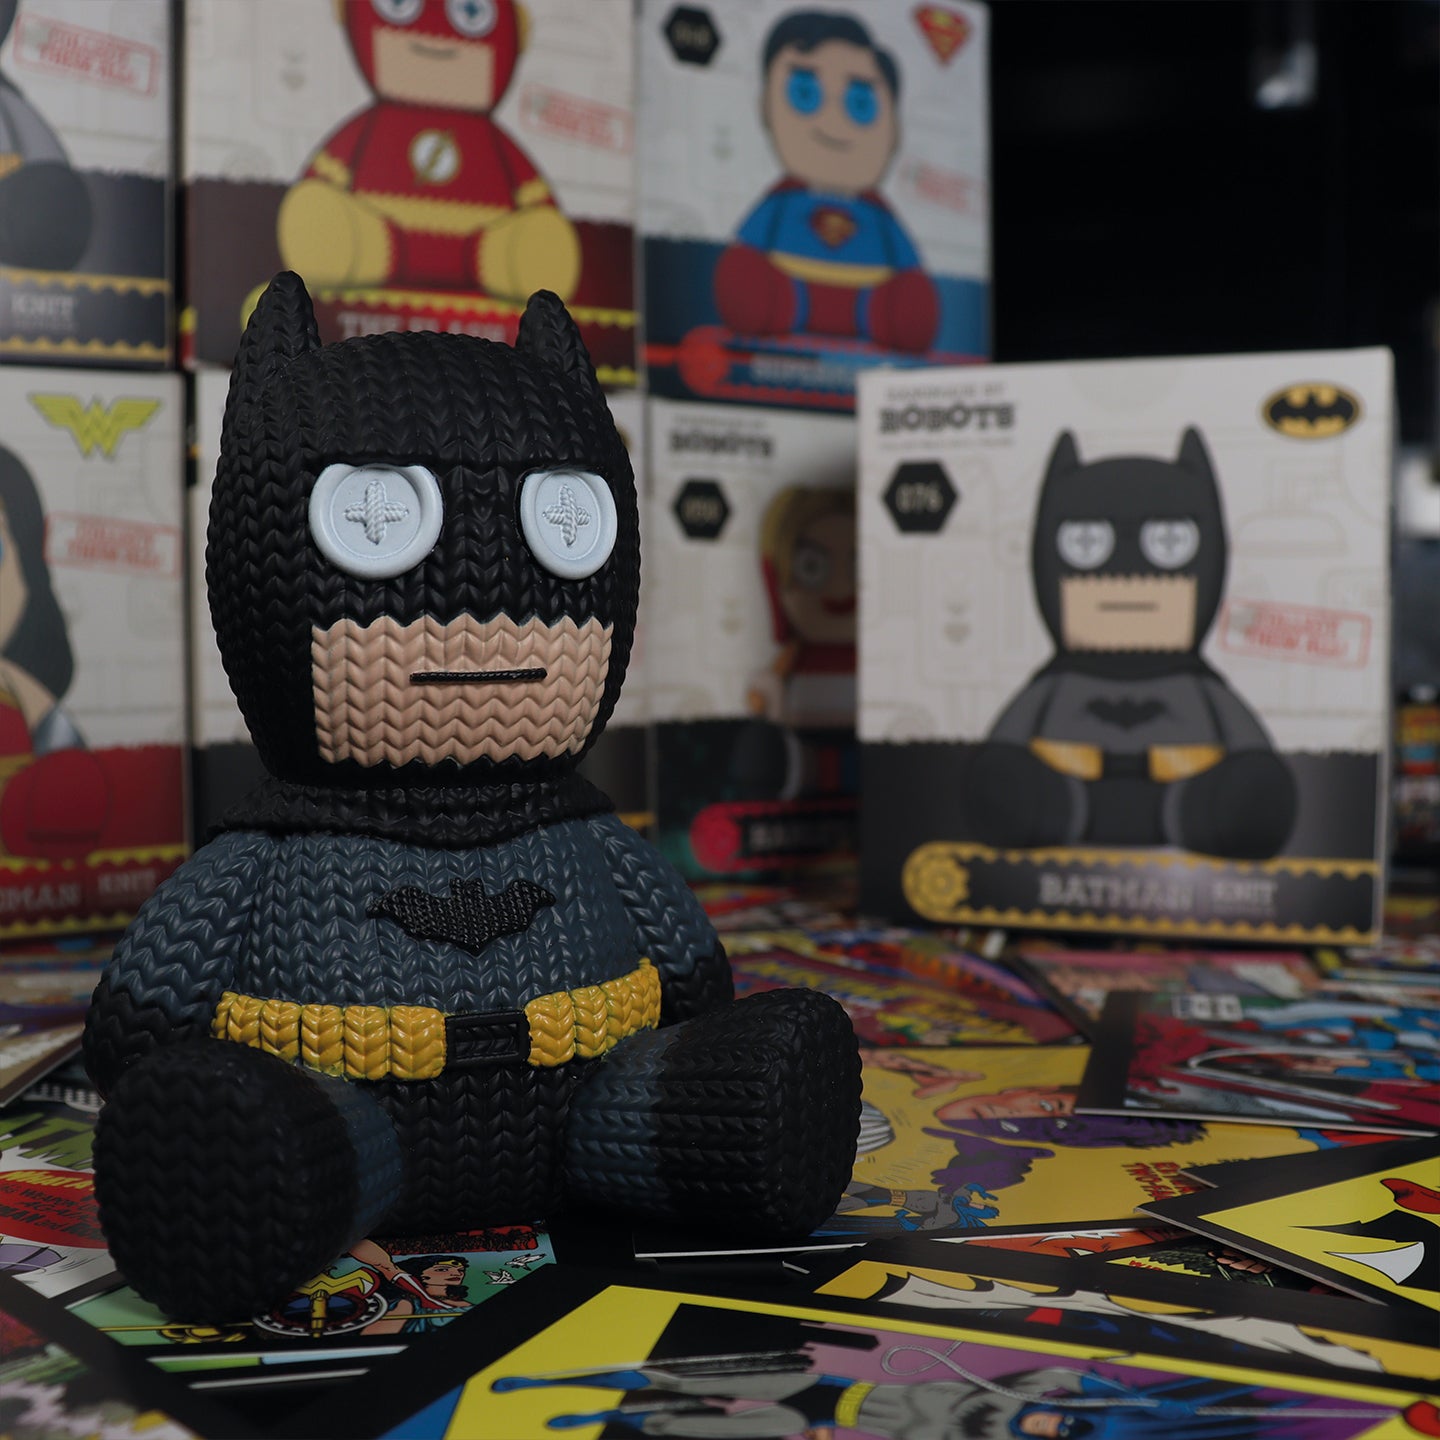 DC - Batman Black Suit Edition Collectible Vinyl Figure from Handmade By Robots